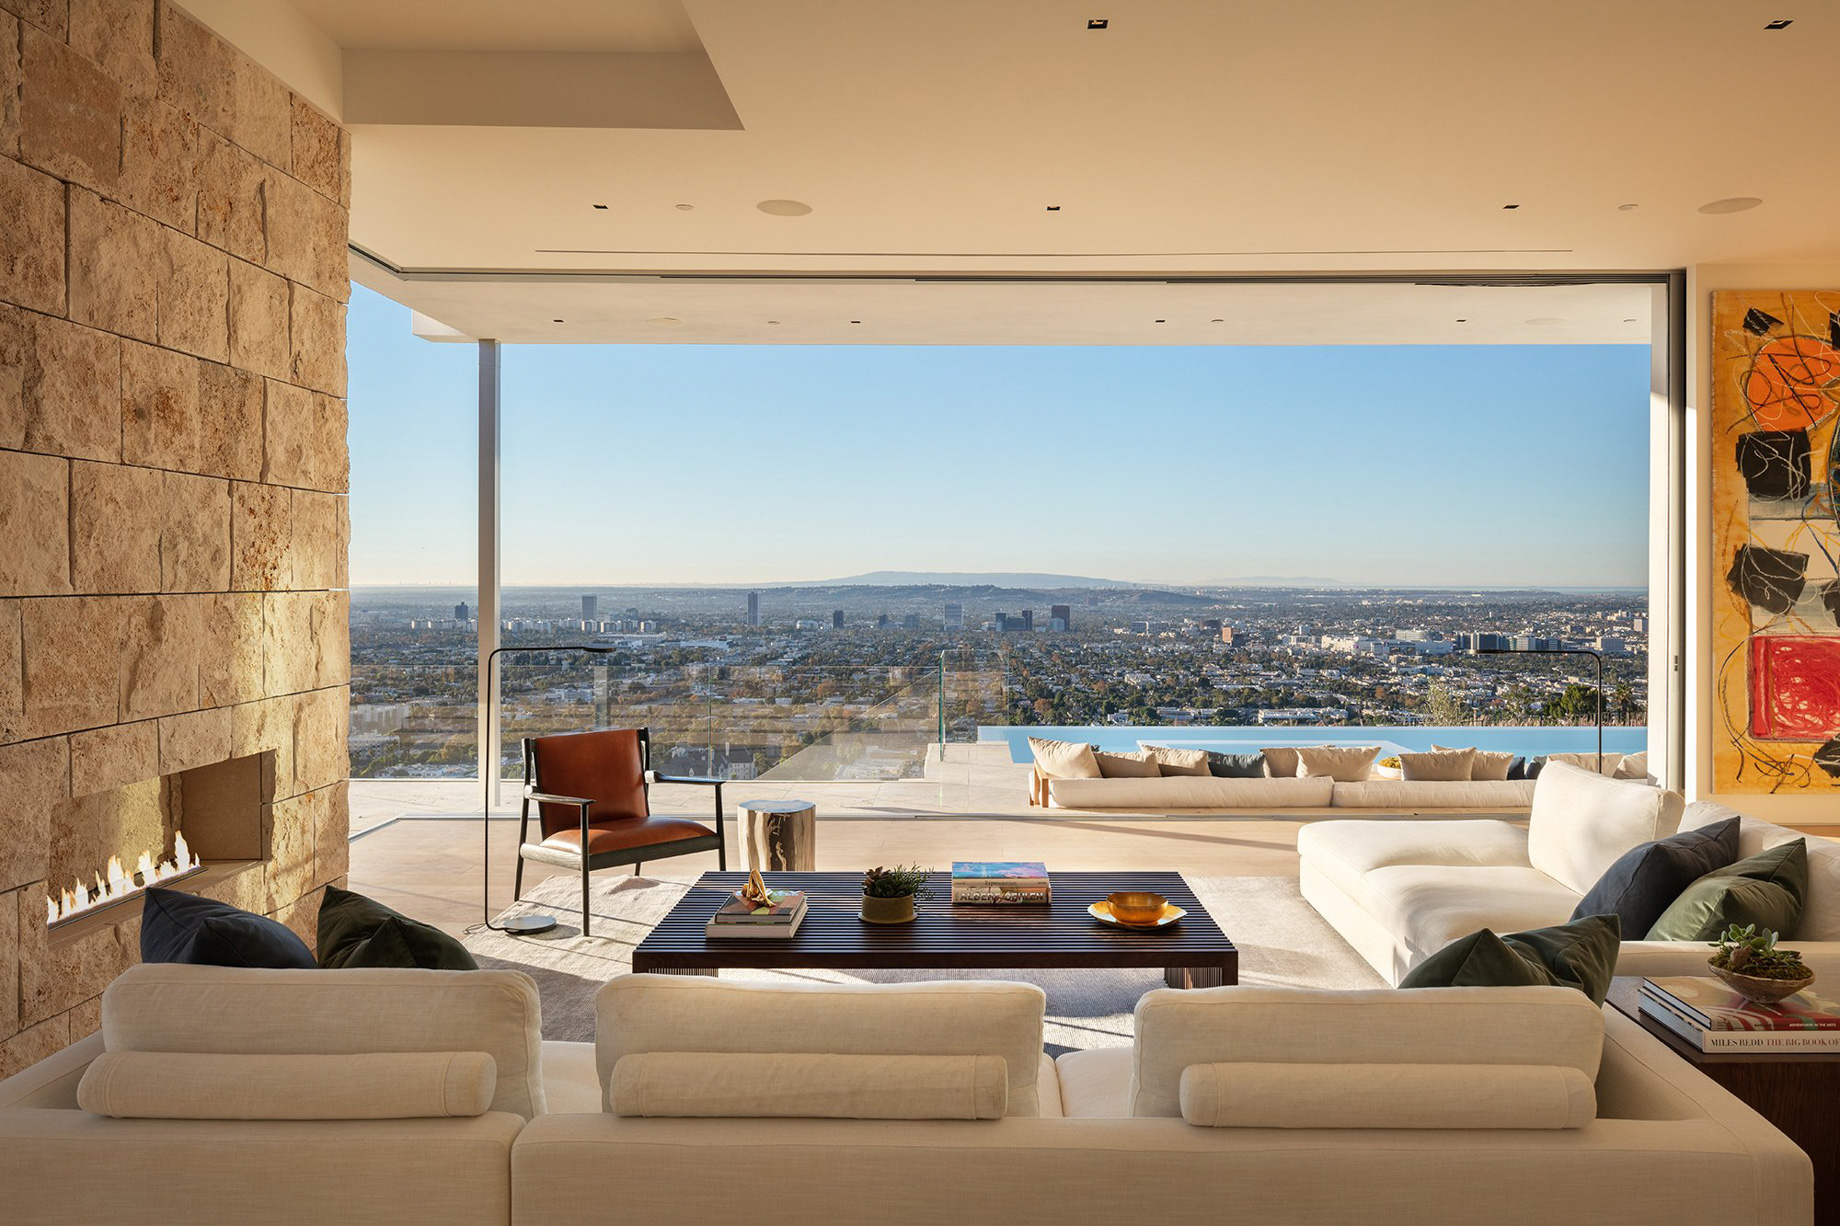 Bellgave Modern Organic Jewel Box-Like Contemporary Home – Los Angeles, CA, USA – 23